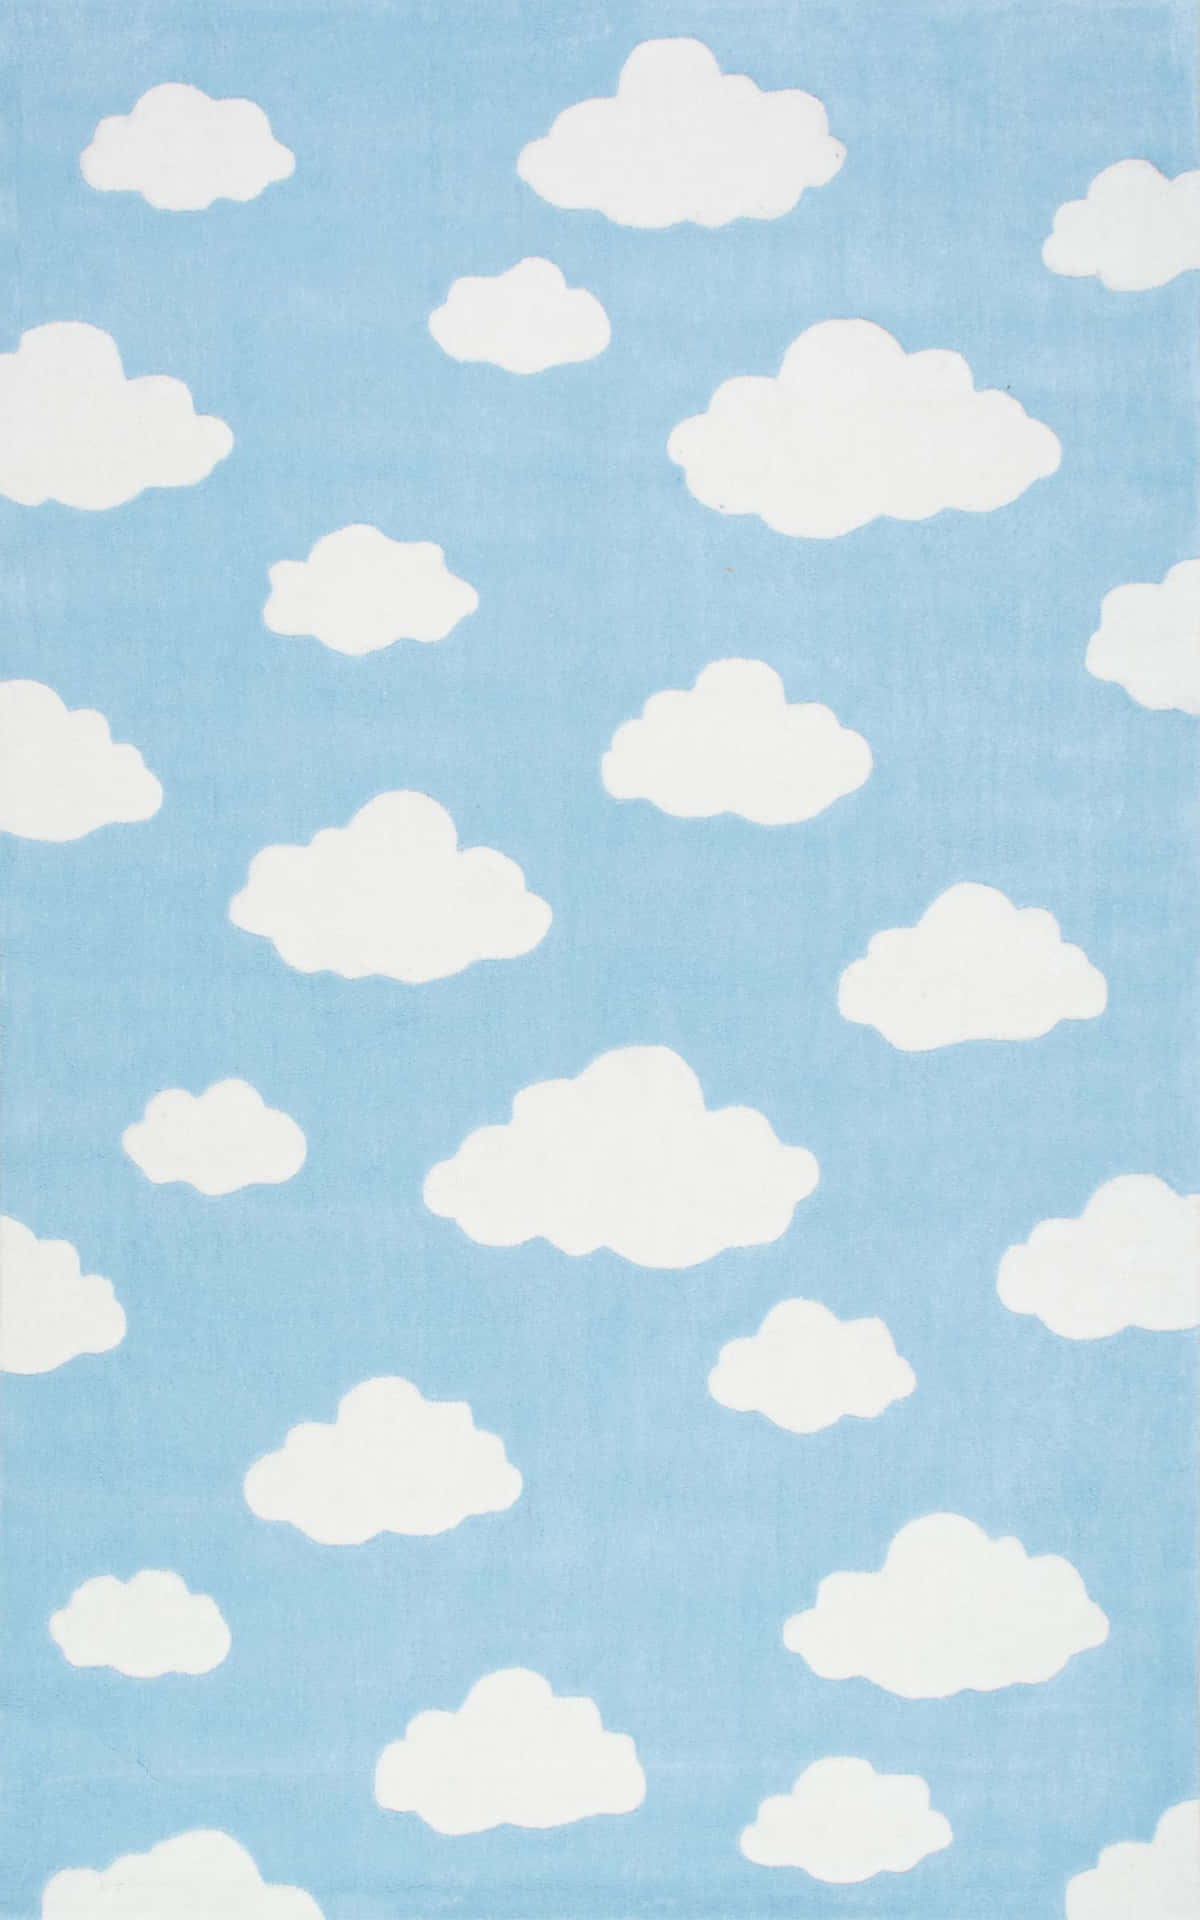 Cute White Clouds Blue Sky Pattern Wallpaper